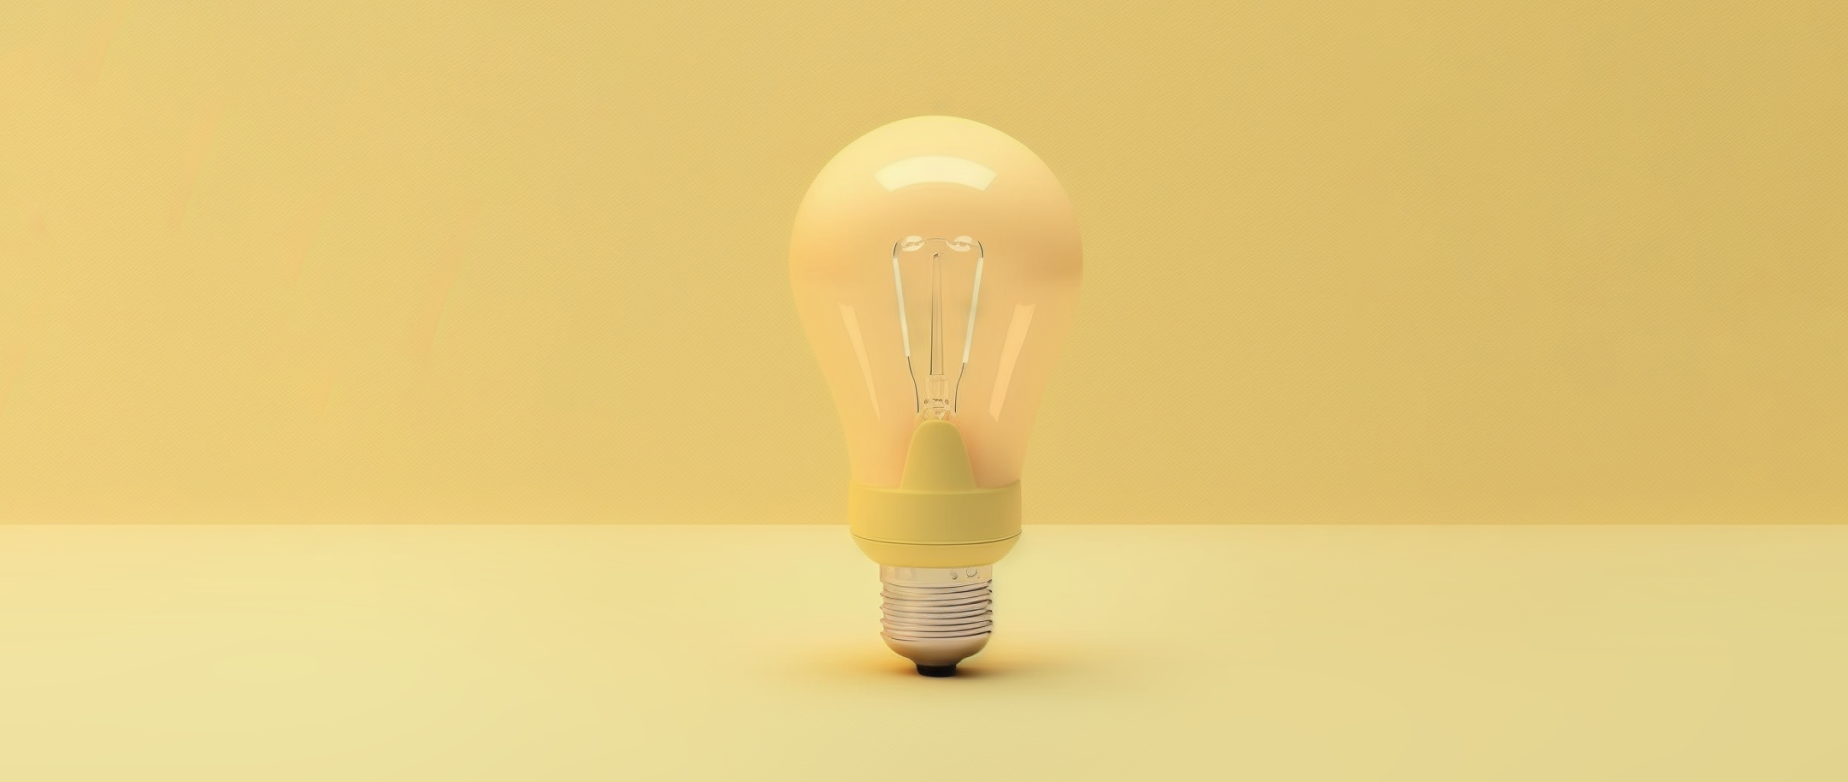 yellow lightbulb on a yellow background